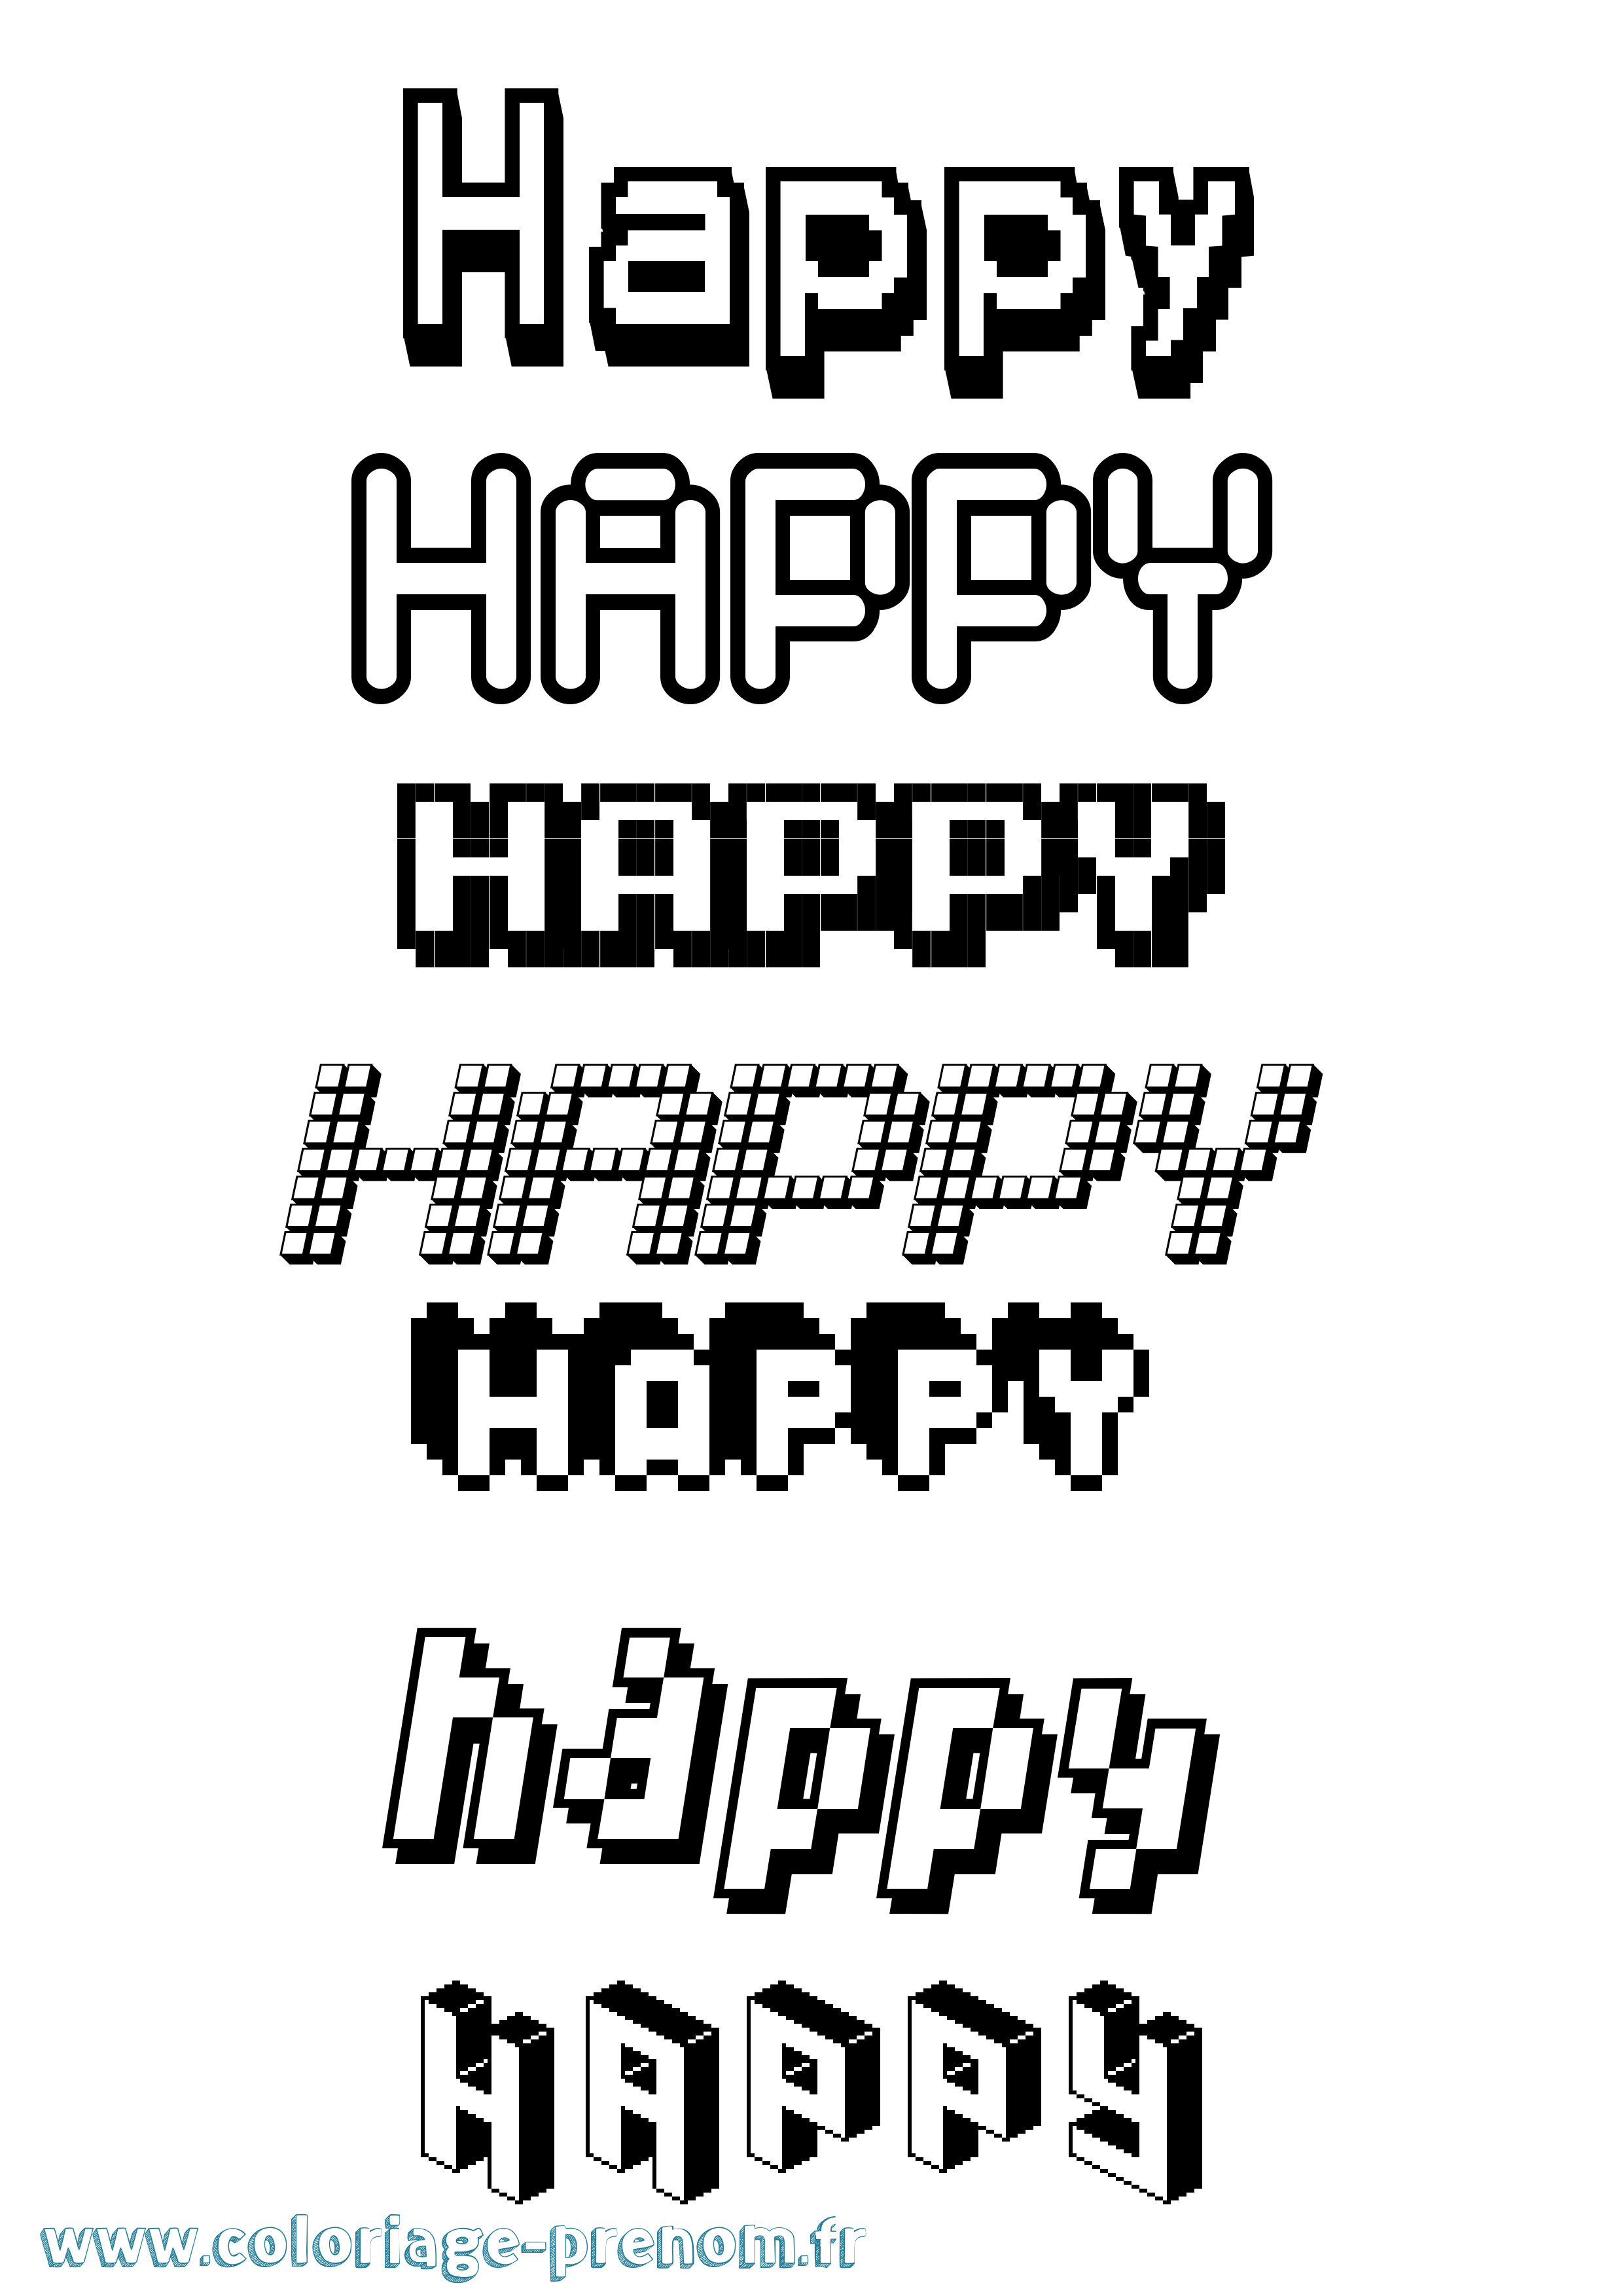 Coloriage prénom Happy Pixel